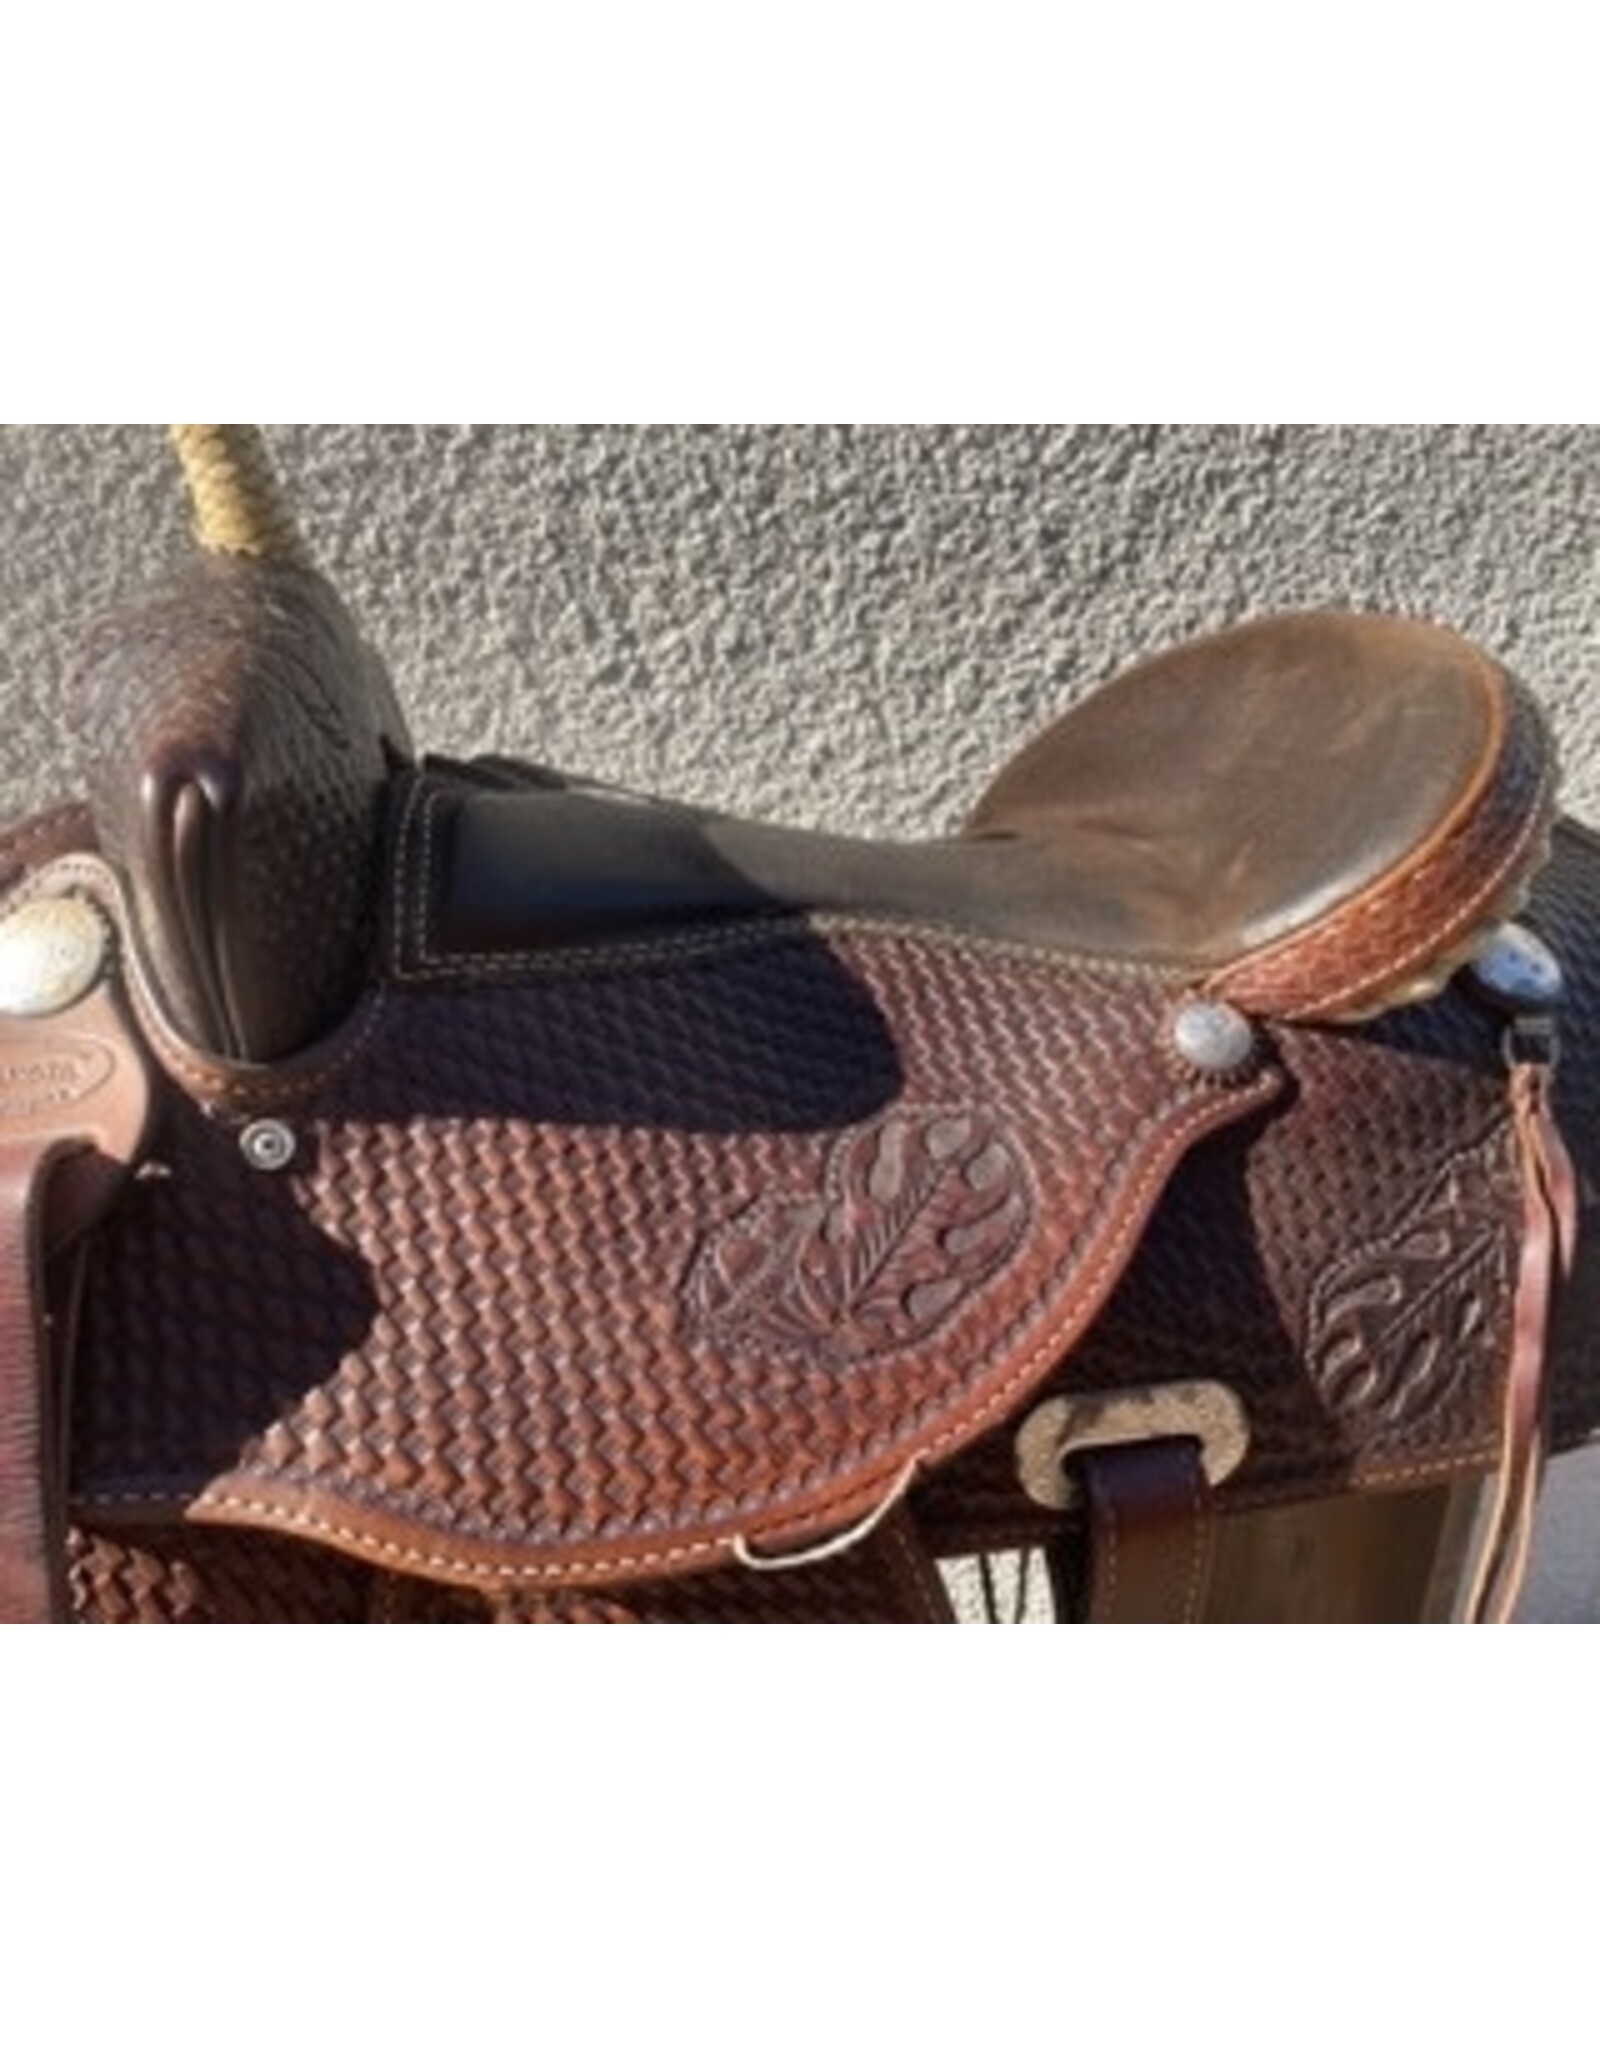 Dakota Pleaseure Barrel Saddle 16.5" Full Quarter Horse Bars w/ breastcollar and flank cinch